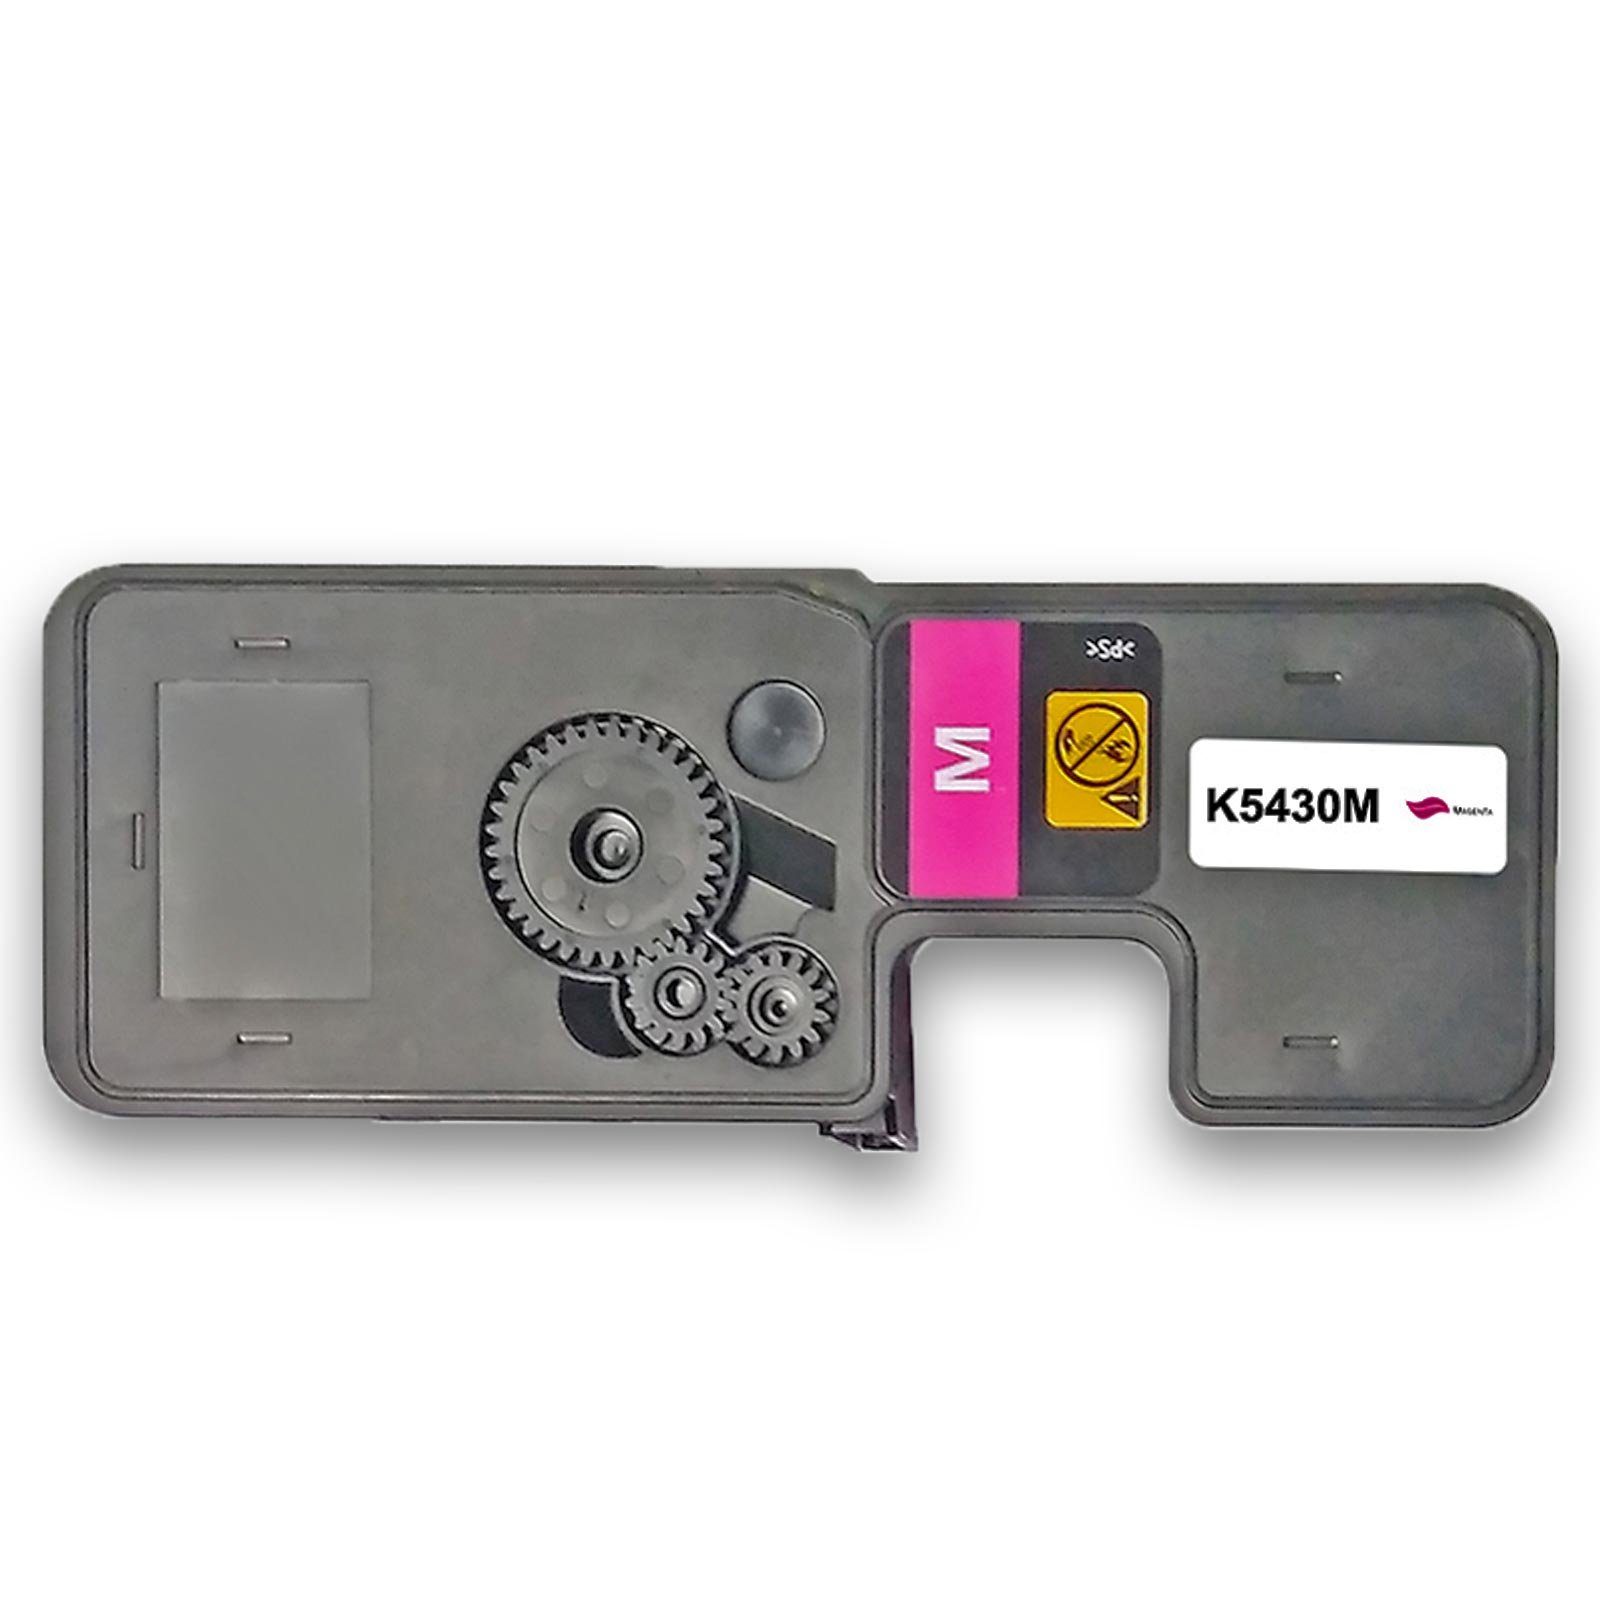 Gigao Tonerkartusche Kompatibel Kyocera TK-5430M Magenta, Lieferumfang: 1x Tonerkassette kompatibel zu Kyocera TK-5430M